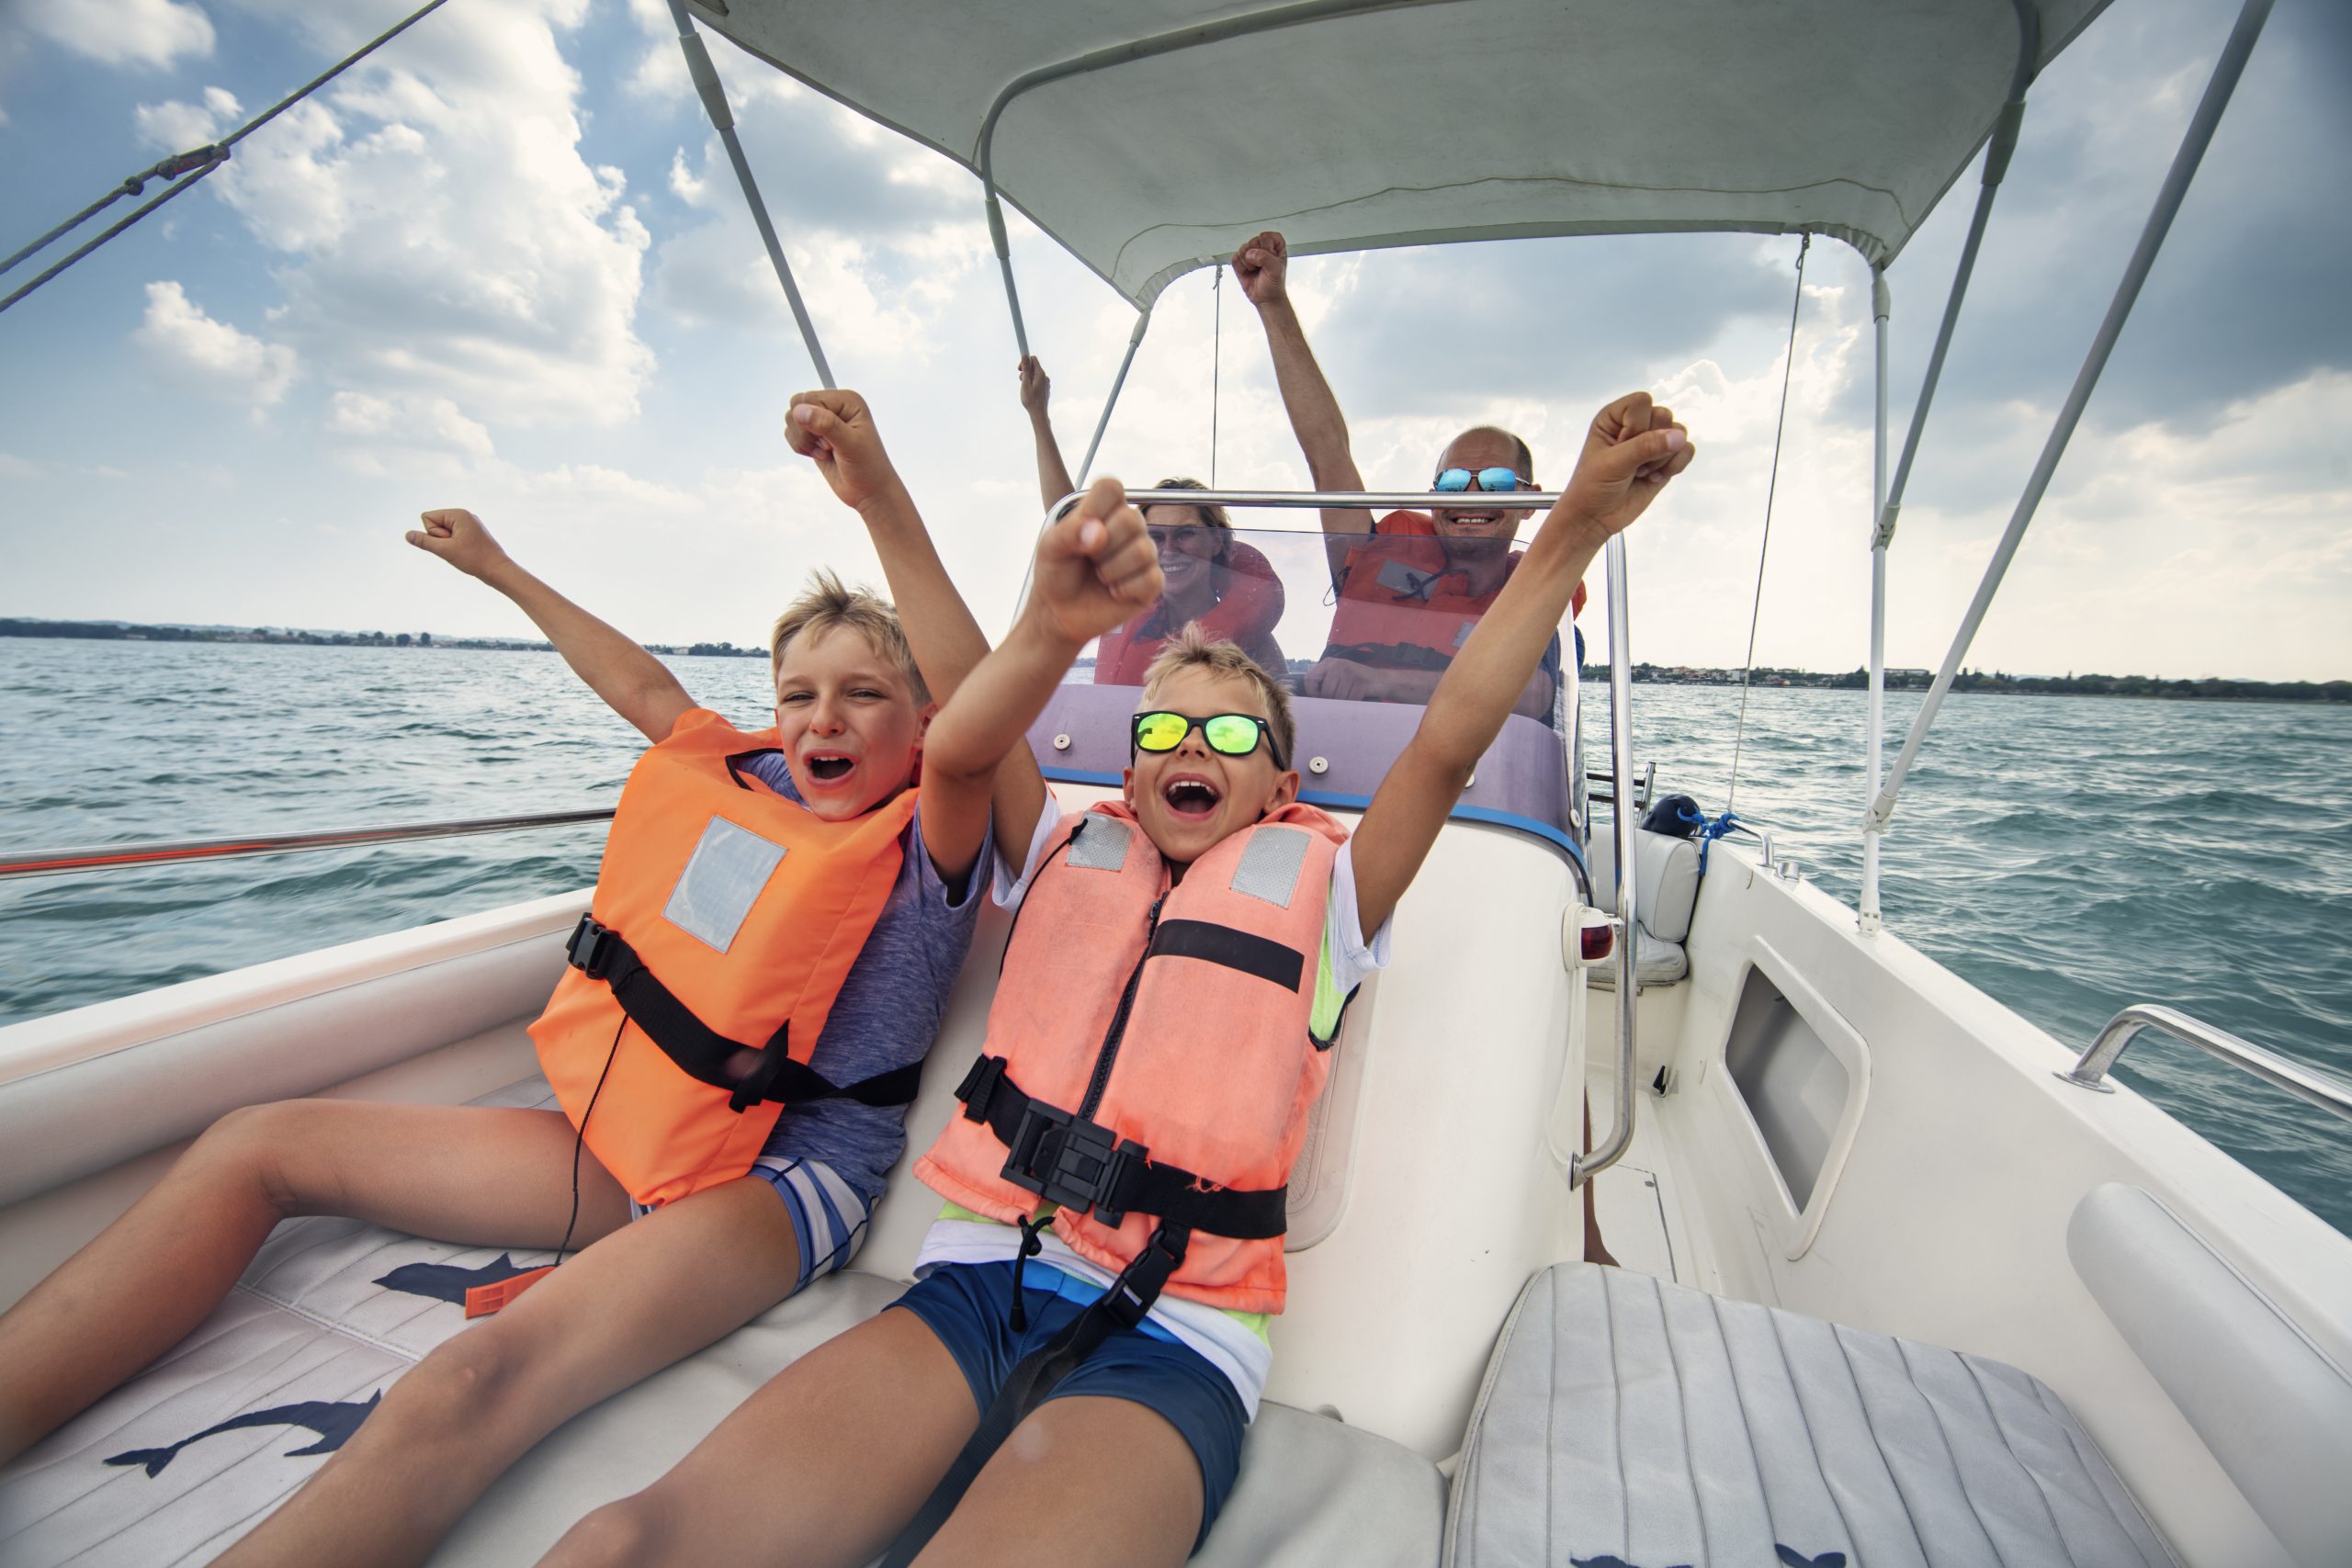 Family enjoying Garda Lake vacations. Parents and kids riding a boat on Lake Garda.
Nikon D850